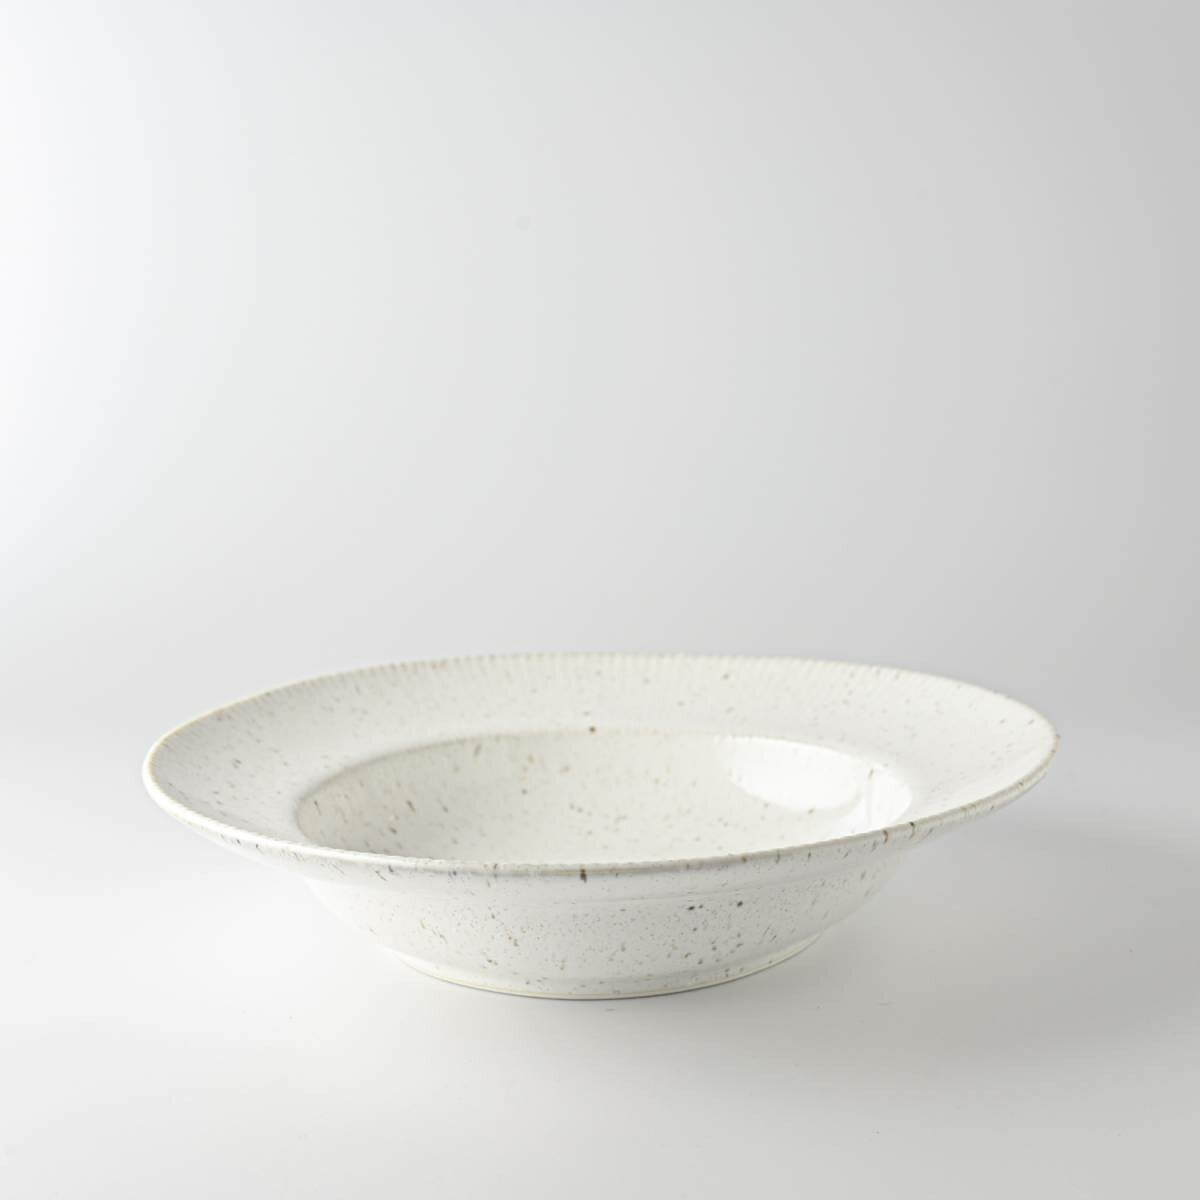 Miyama "cadre" coupe plate, white variegated glaze